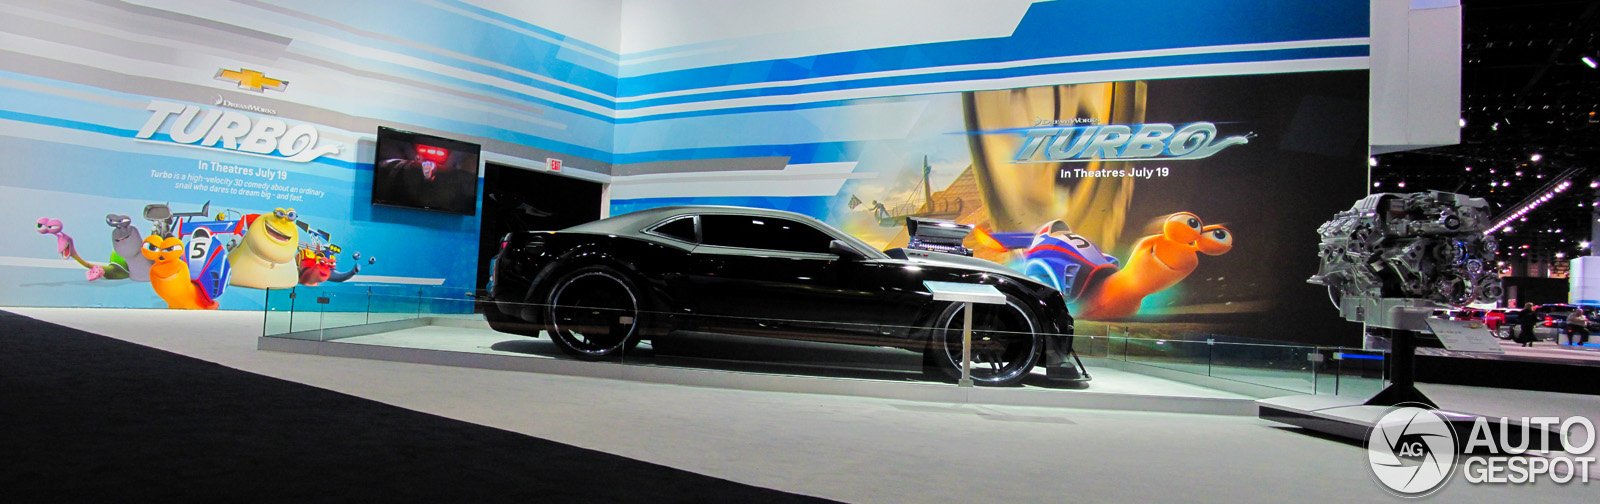 Le Chicago Motor Show 2013 : la Chevrolet "Turbo" Camaro Coupé